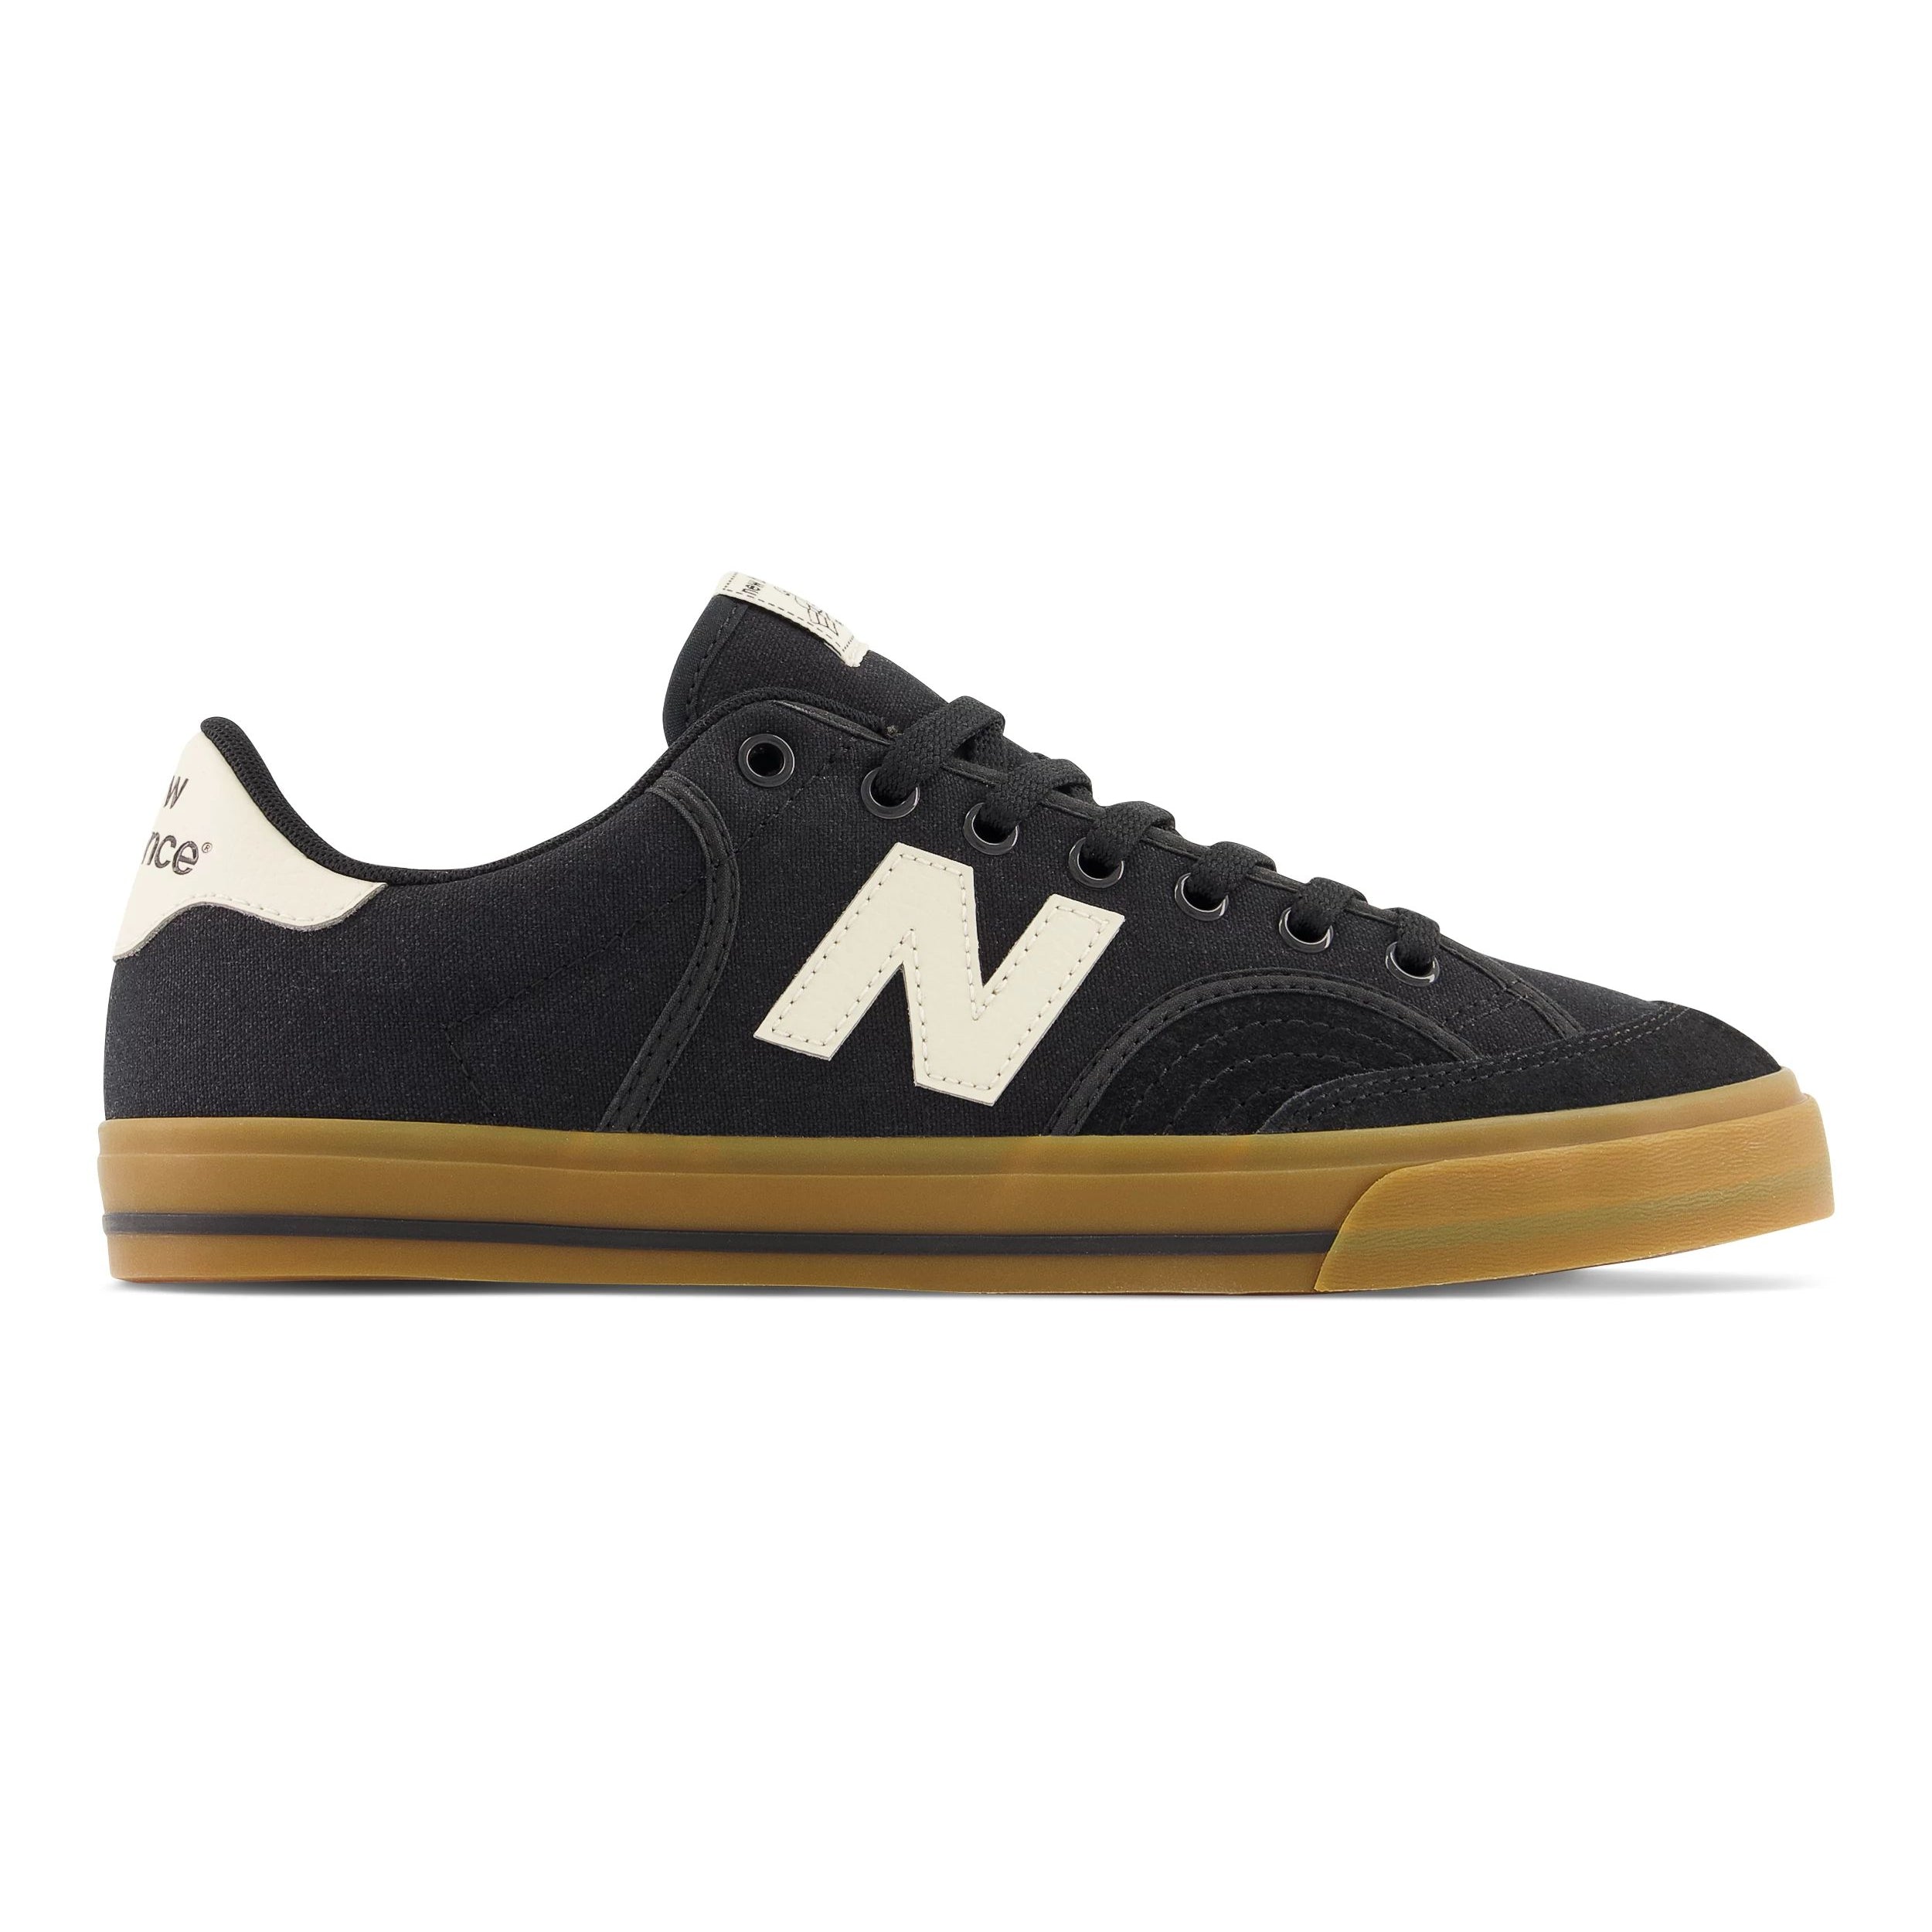 Black/Gum NM212 Pro Court NB Numeric Skate Shoe